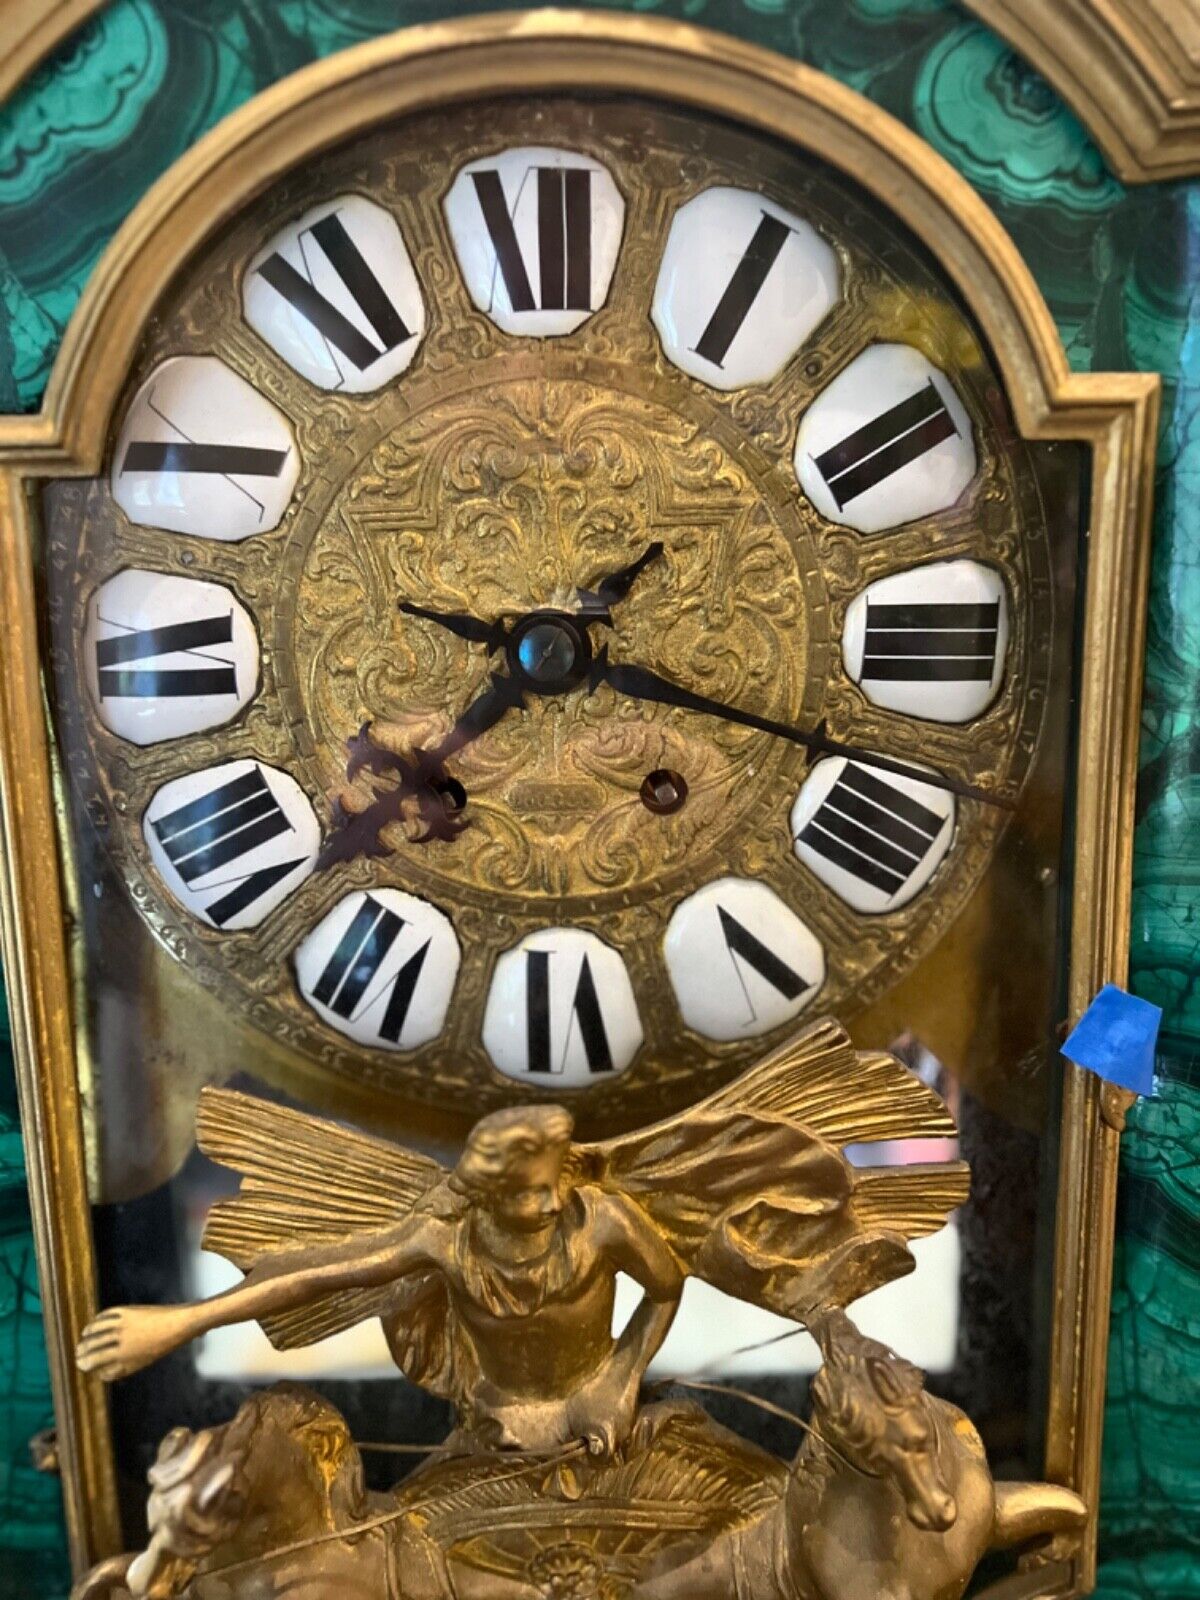 19th Century Clock face